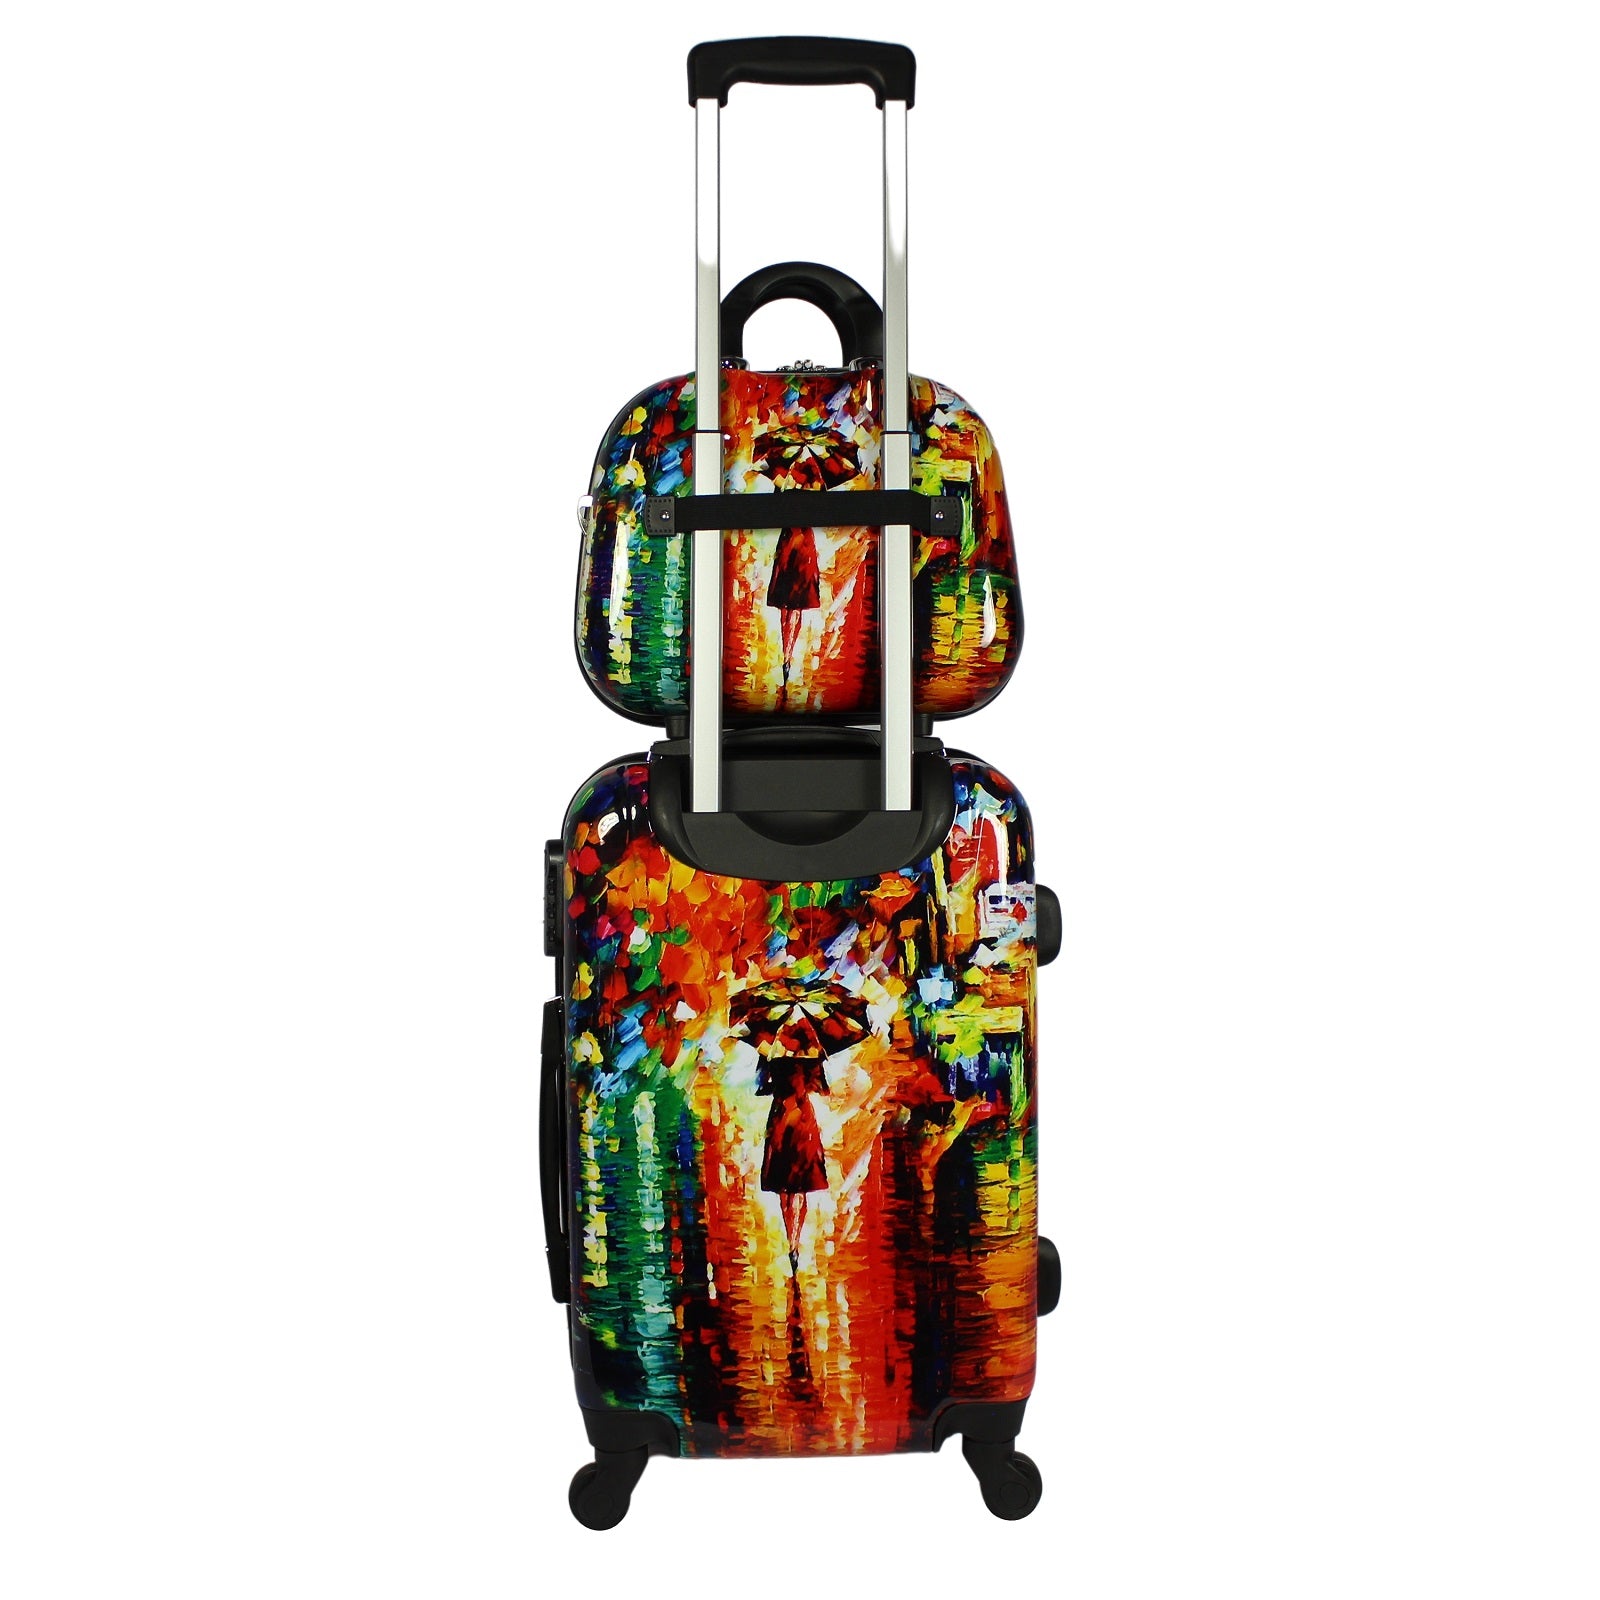 World Traveler 2-Piece Carry-On Hardside Spinner Luggage Set - Paris Nights